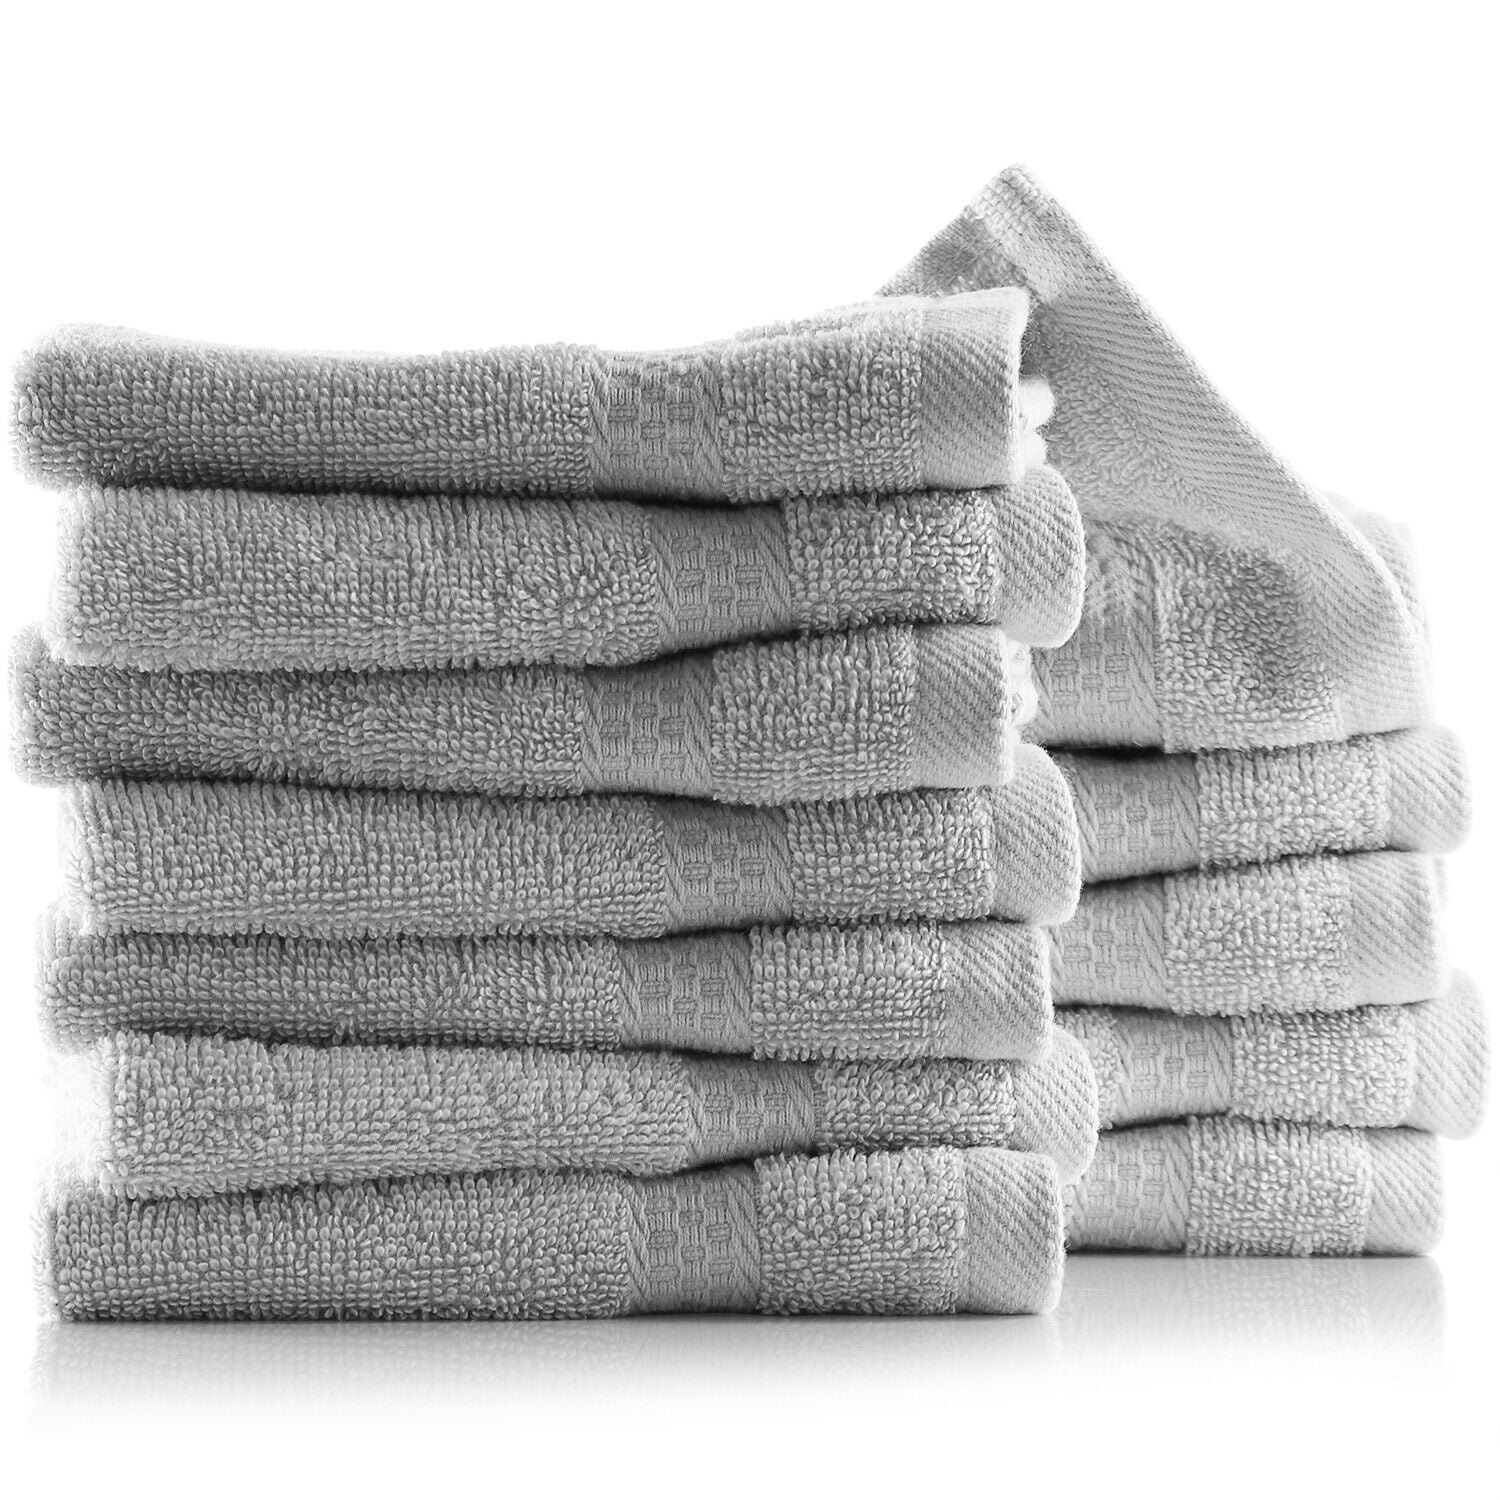 New 12pk White 24x48 8 Lbs 100% Cotton RingSpun Economy Grade Bath Towels V9120 